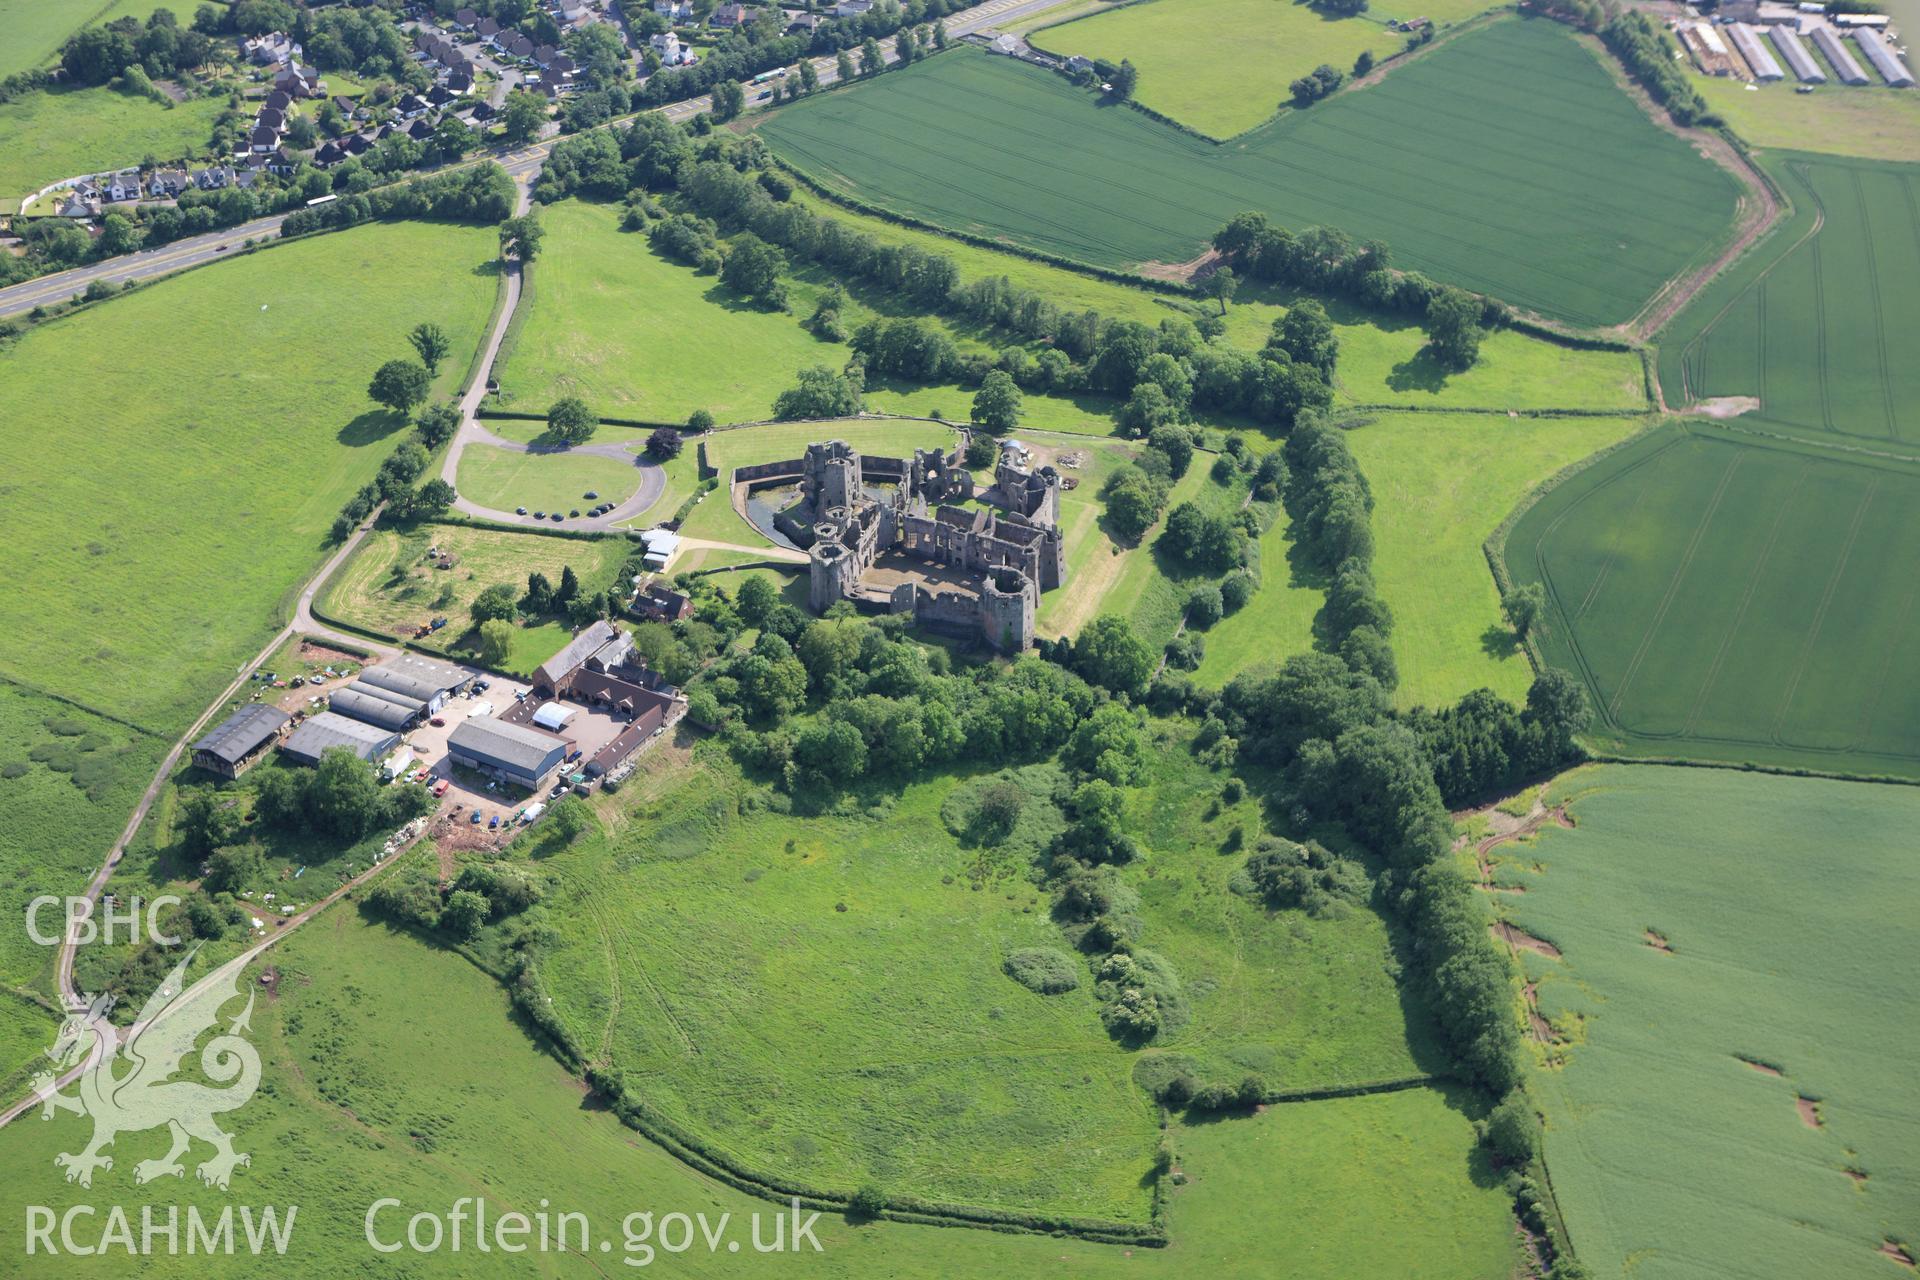 RCAHMW colour oblique aerial photograph of Raglan Castle. Taken on 11 June 2009 by Toby Driver